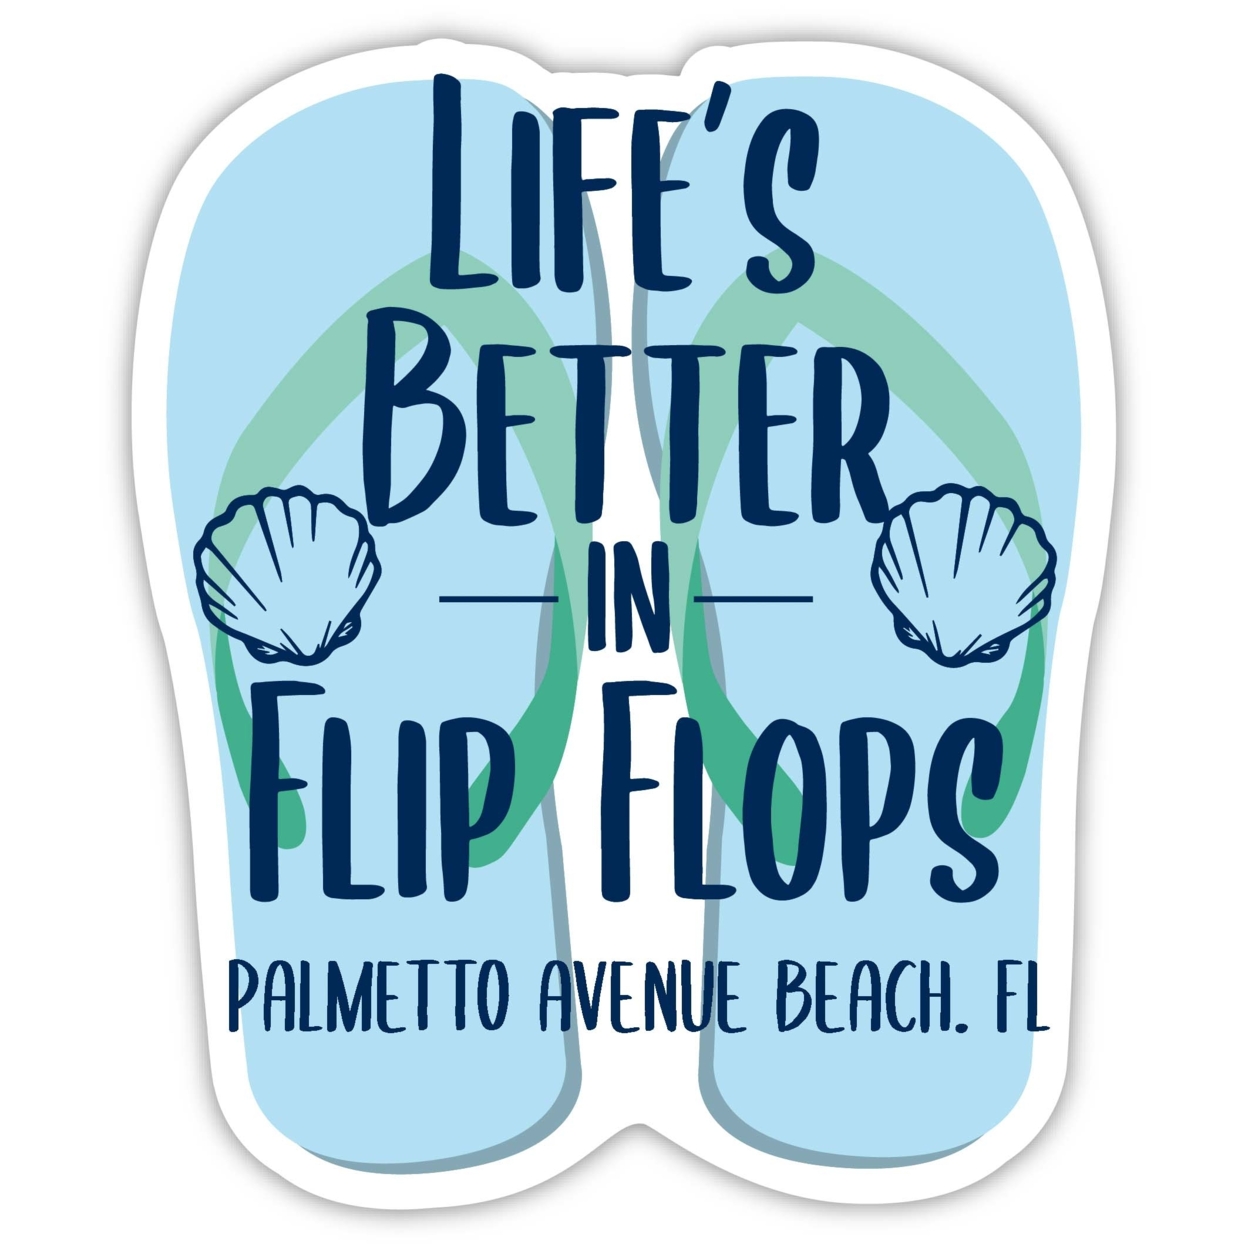 Palmetto Avenue Beach Florida Souvenir 4 Inch Vinyl Decal Sticker Flip Flop Design